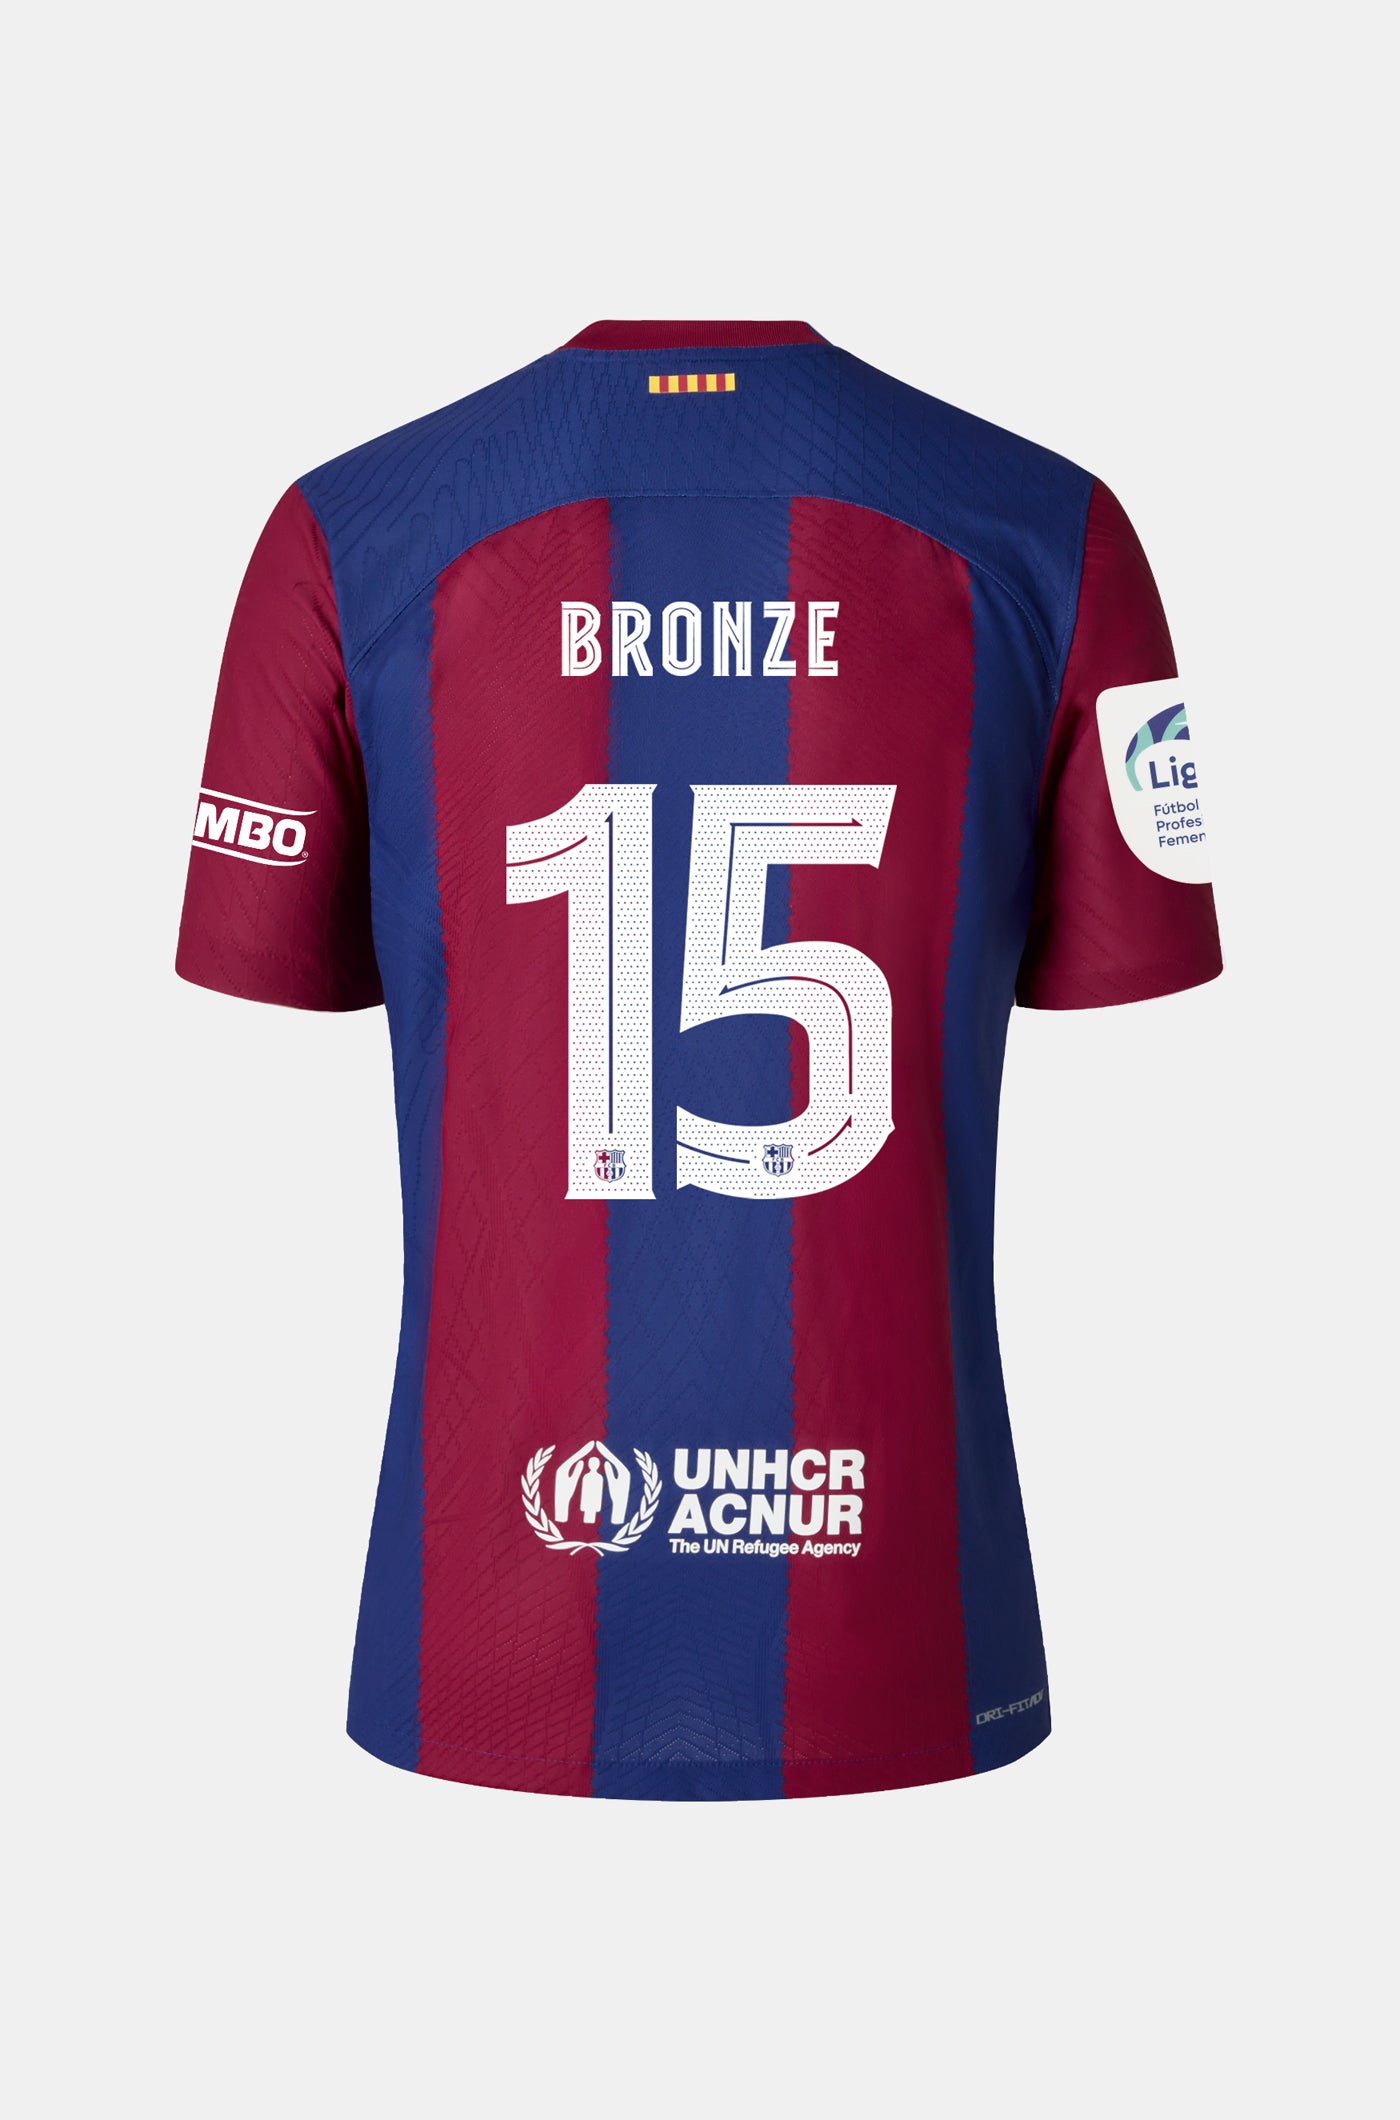 Liga F FC Barcelona Home Shirt 23/24 Player's Edition - Women - BRONZE